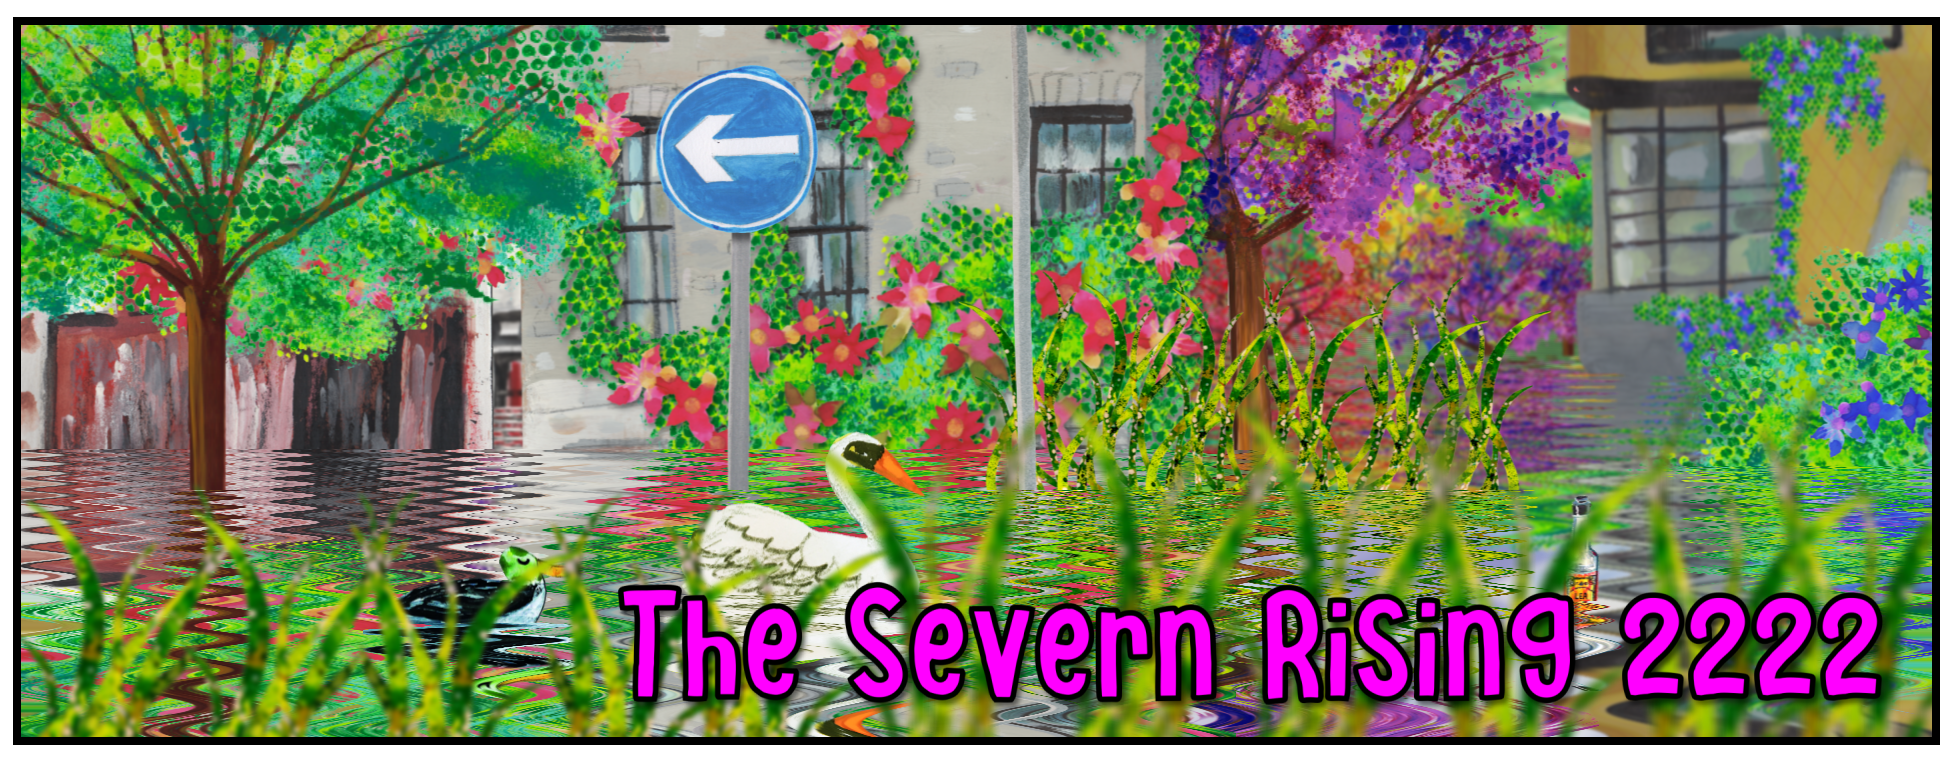 The Severn Rising 2222